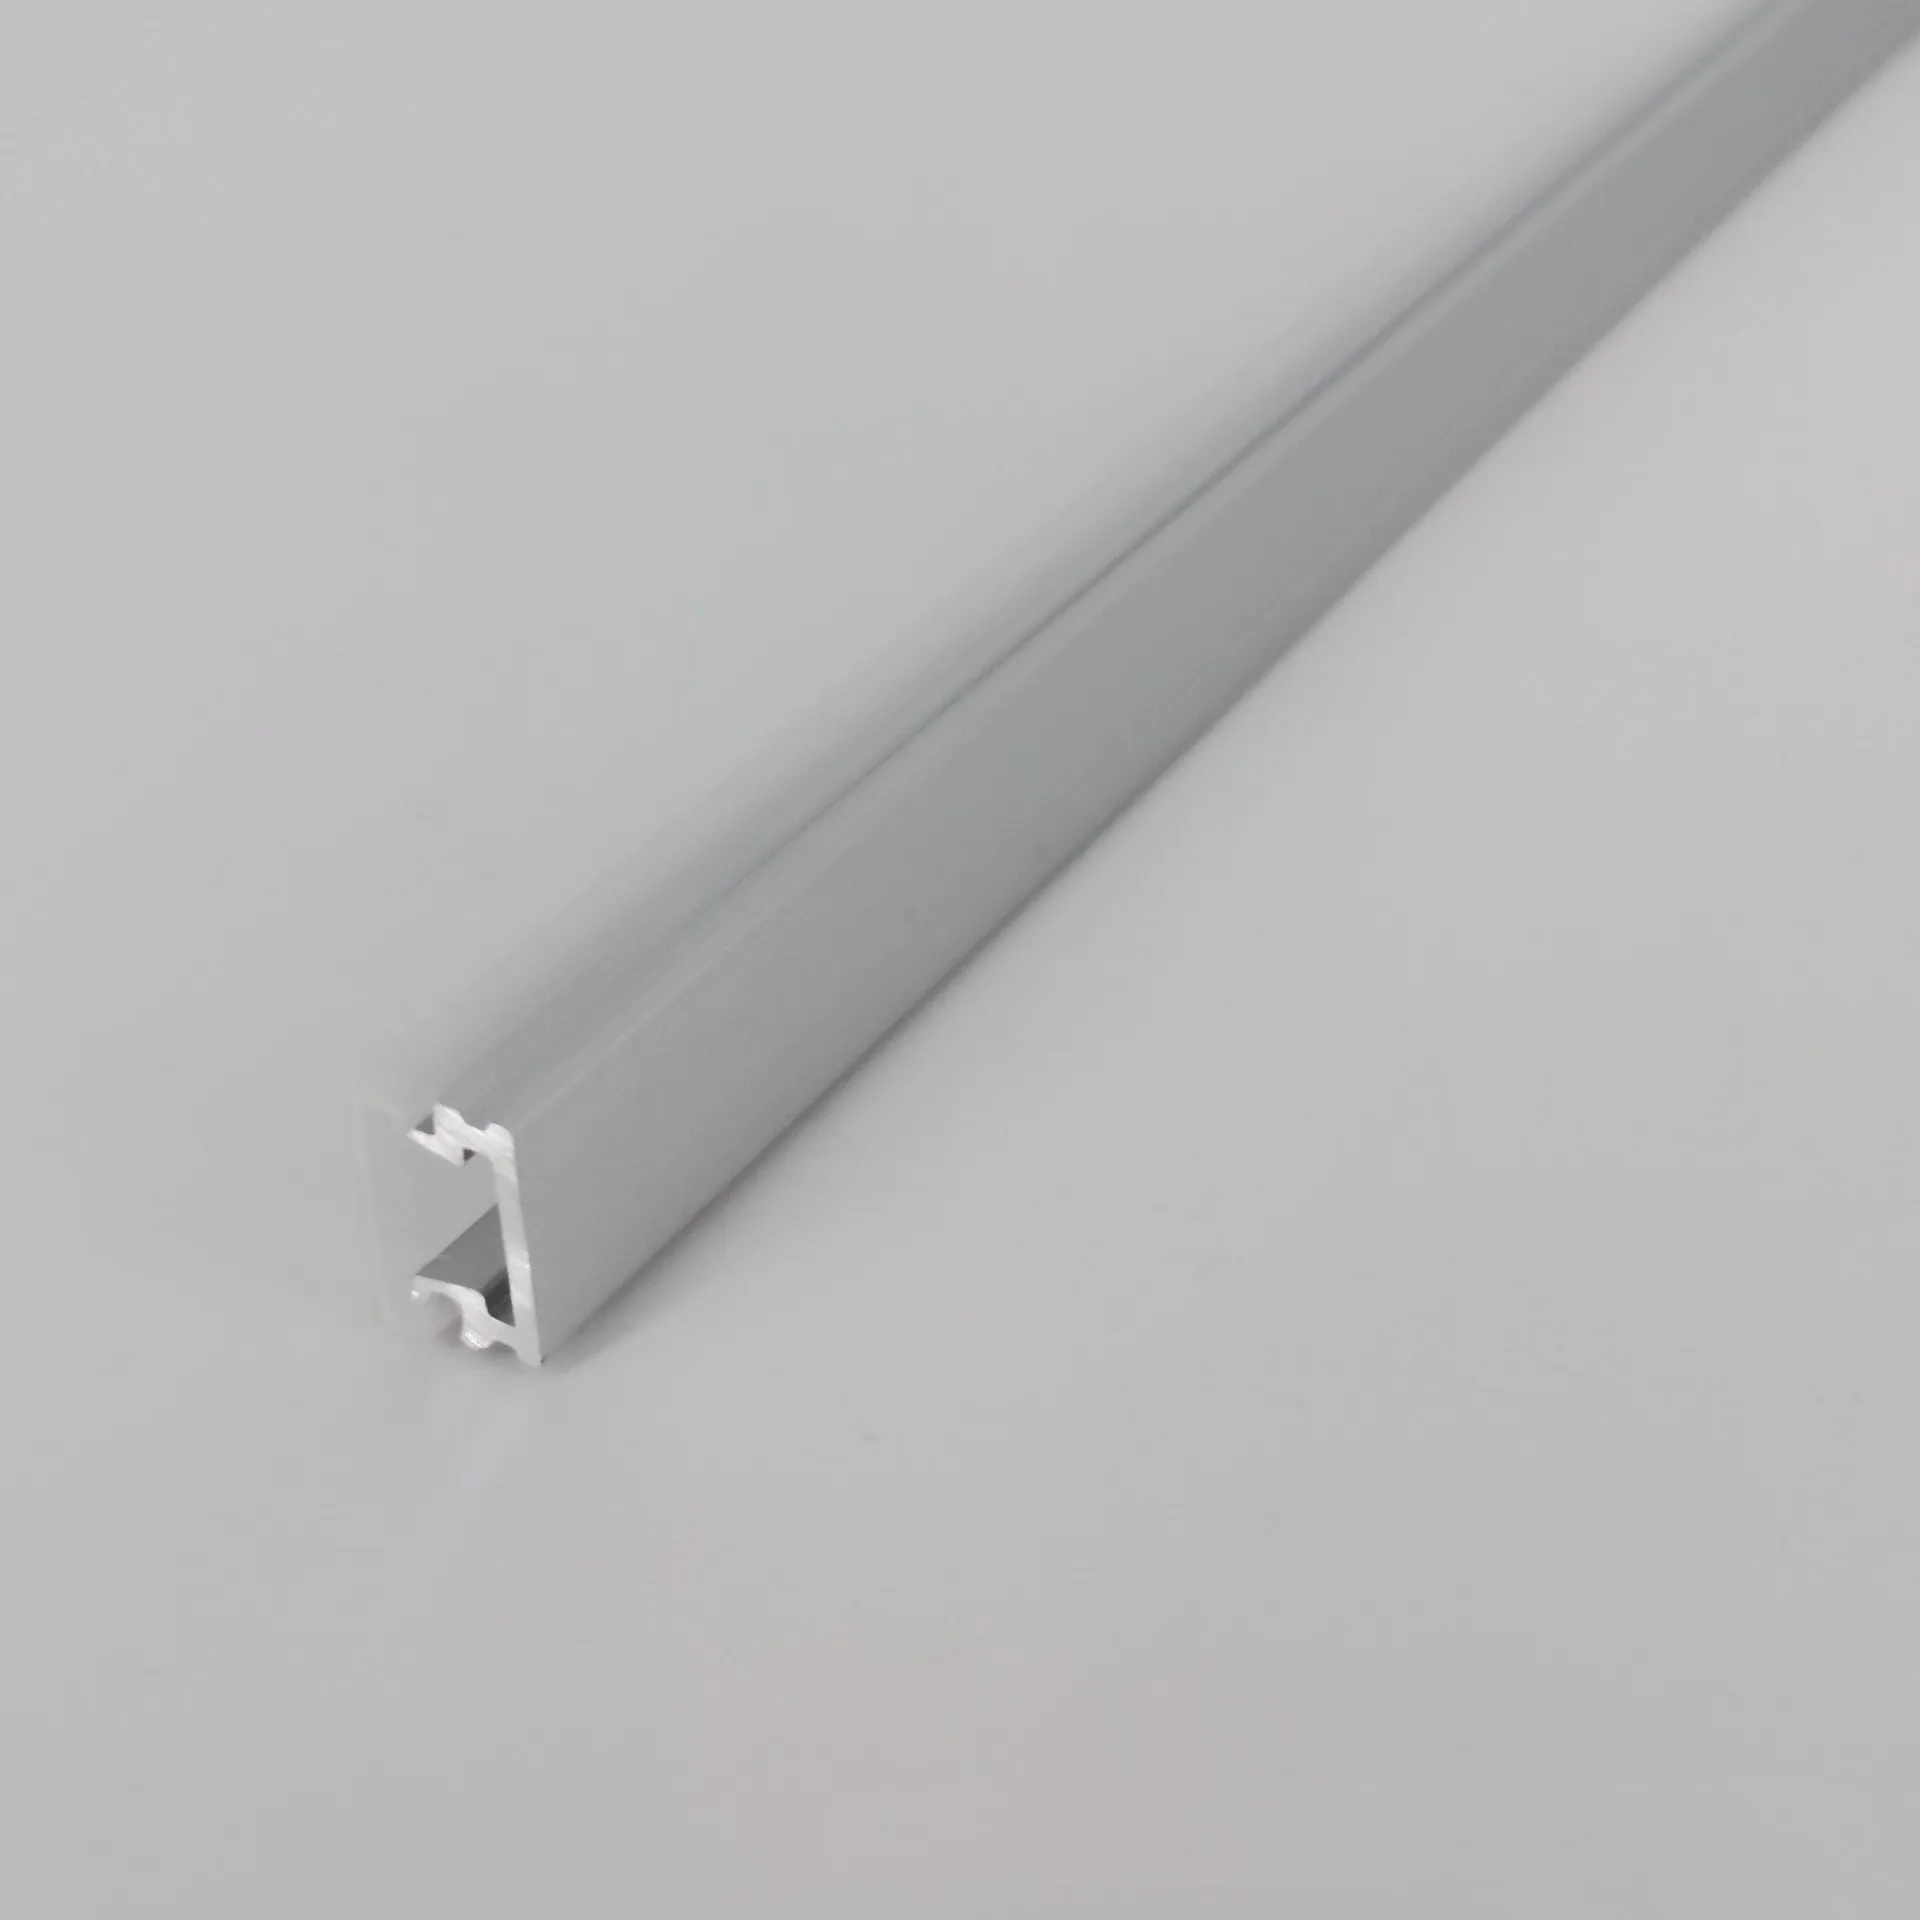 1.5m/pcs Free Shipping fedex LED Aluminium Profile for LED Bar Light,LED Strip PC material housing+end caps+clips